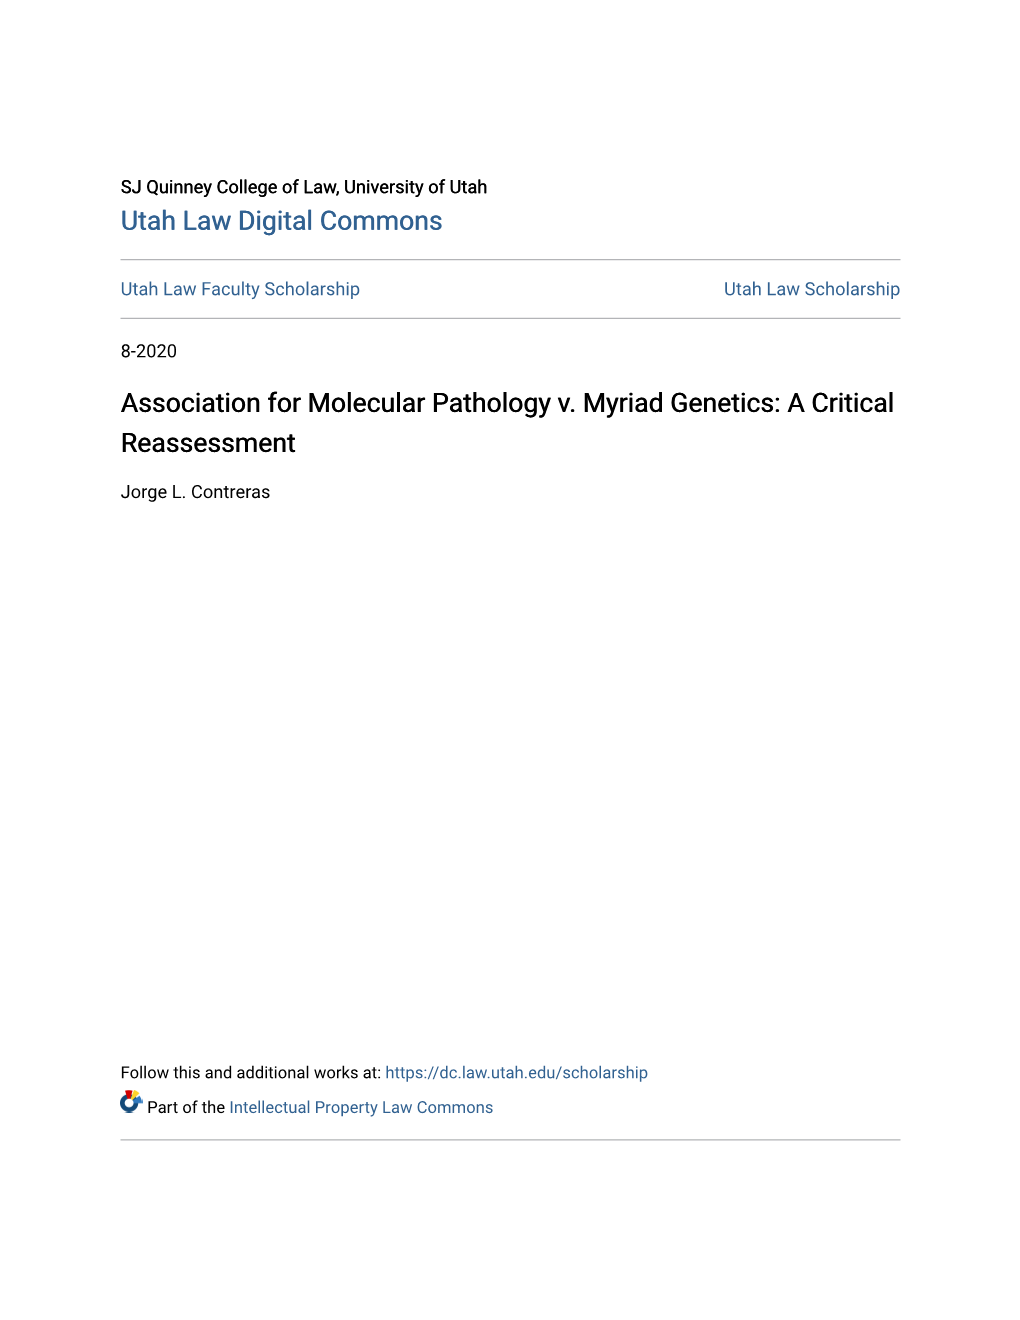 Association for Molecular Pathology V